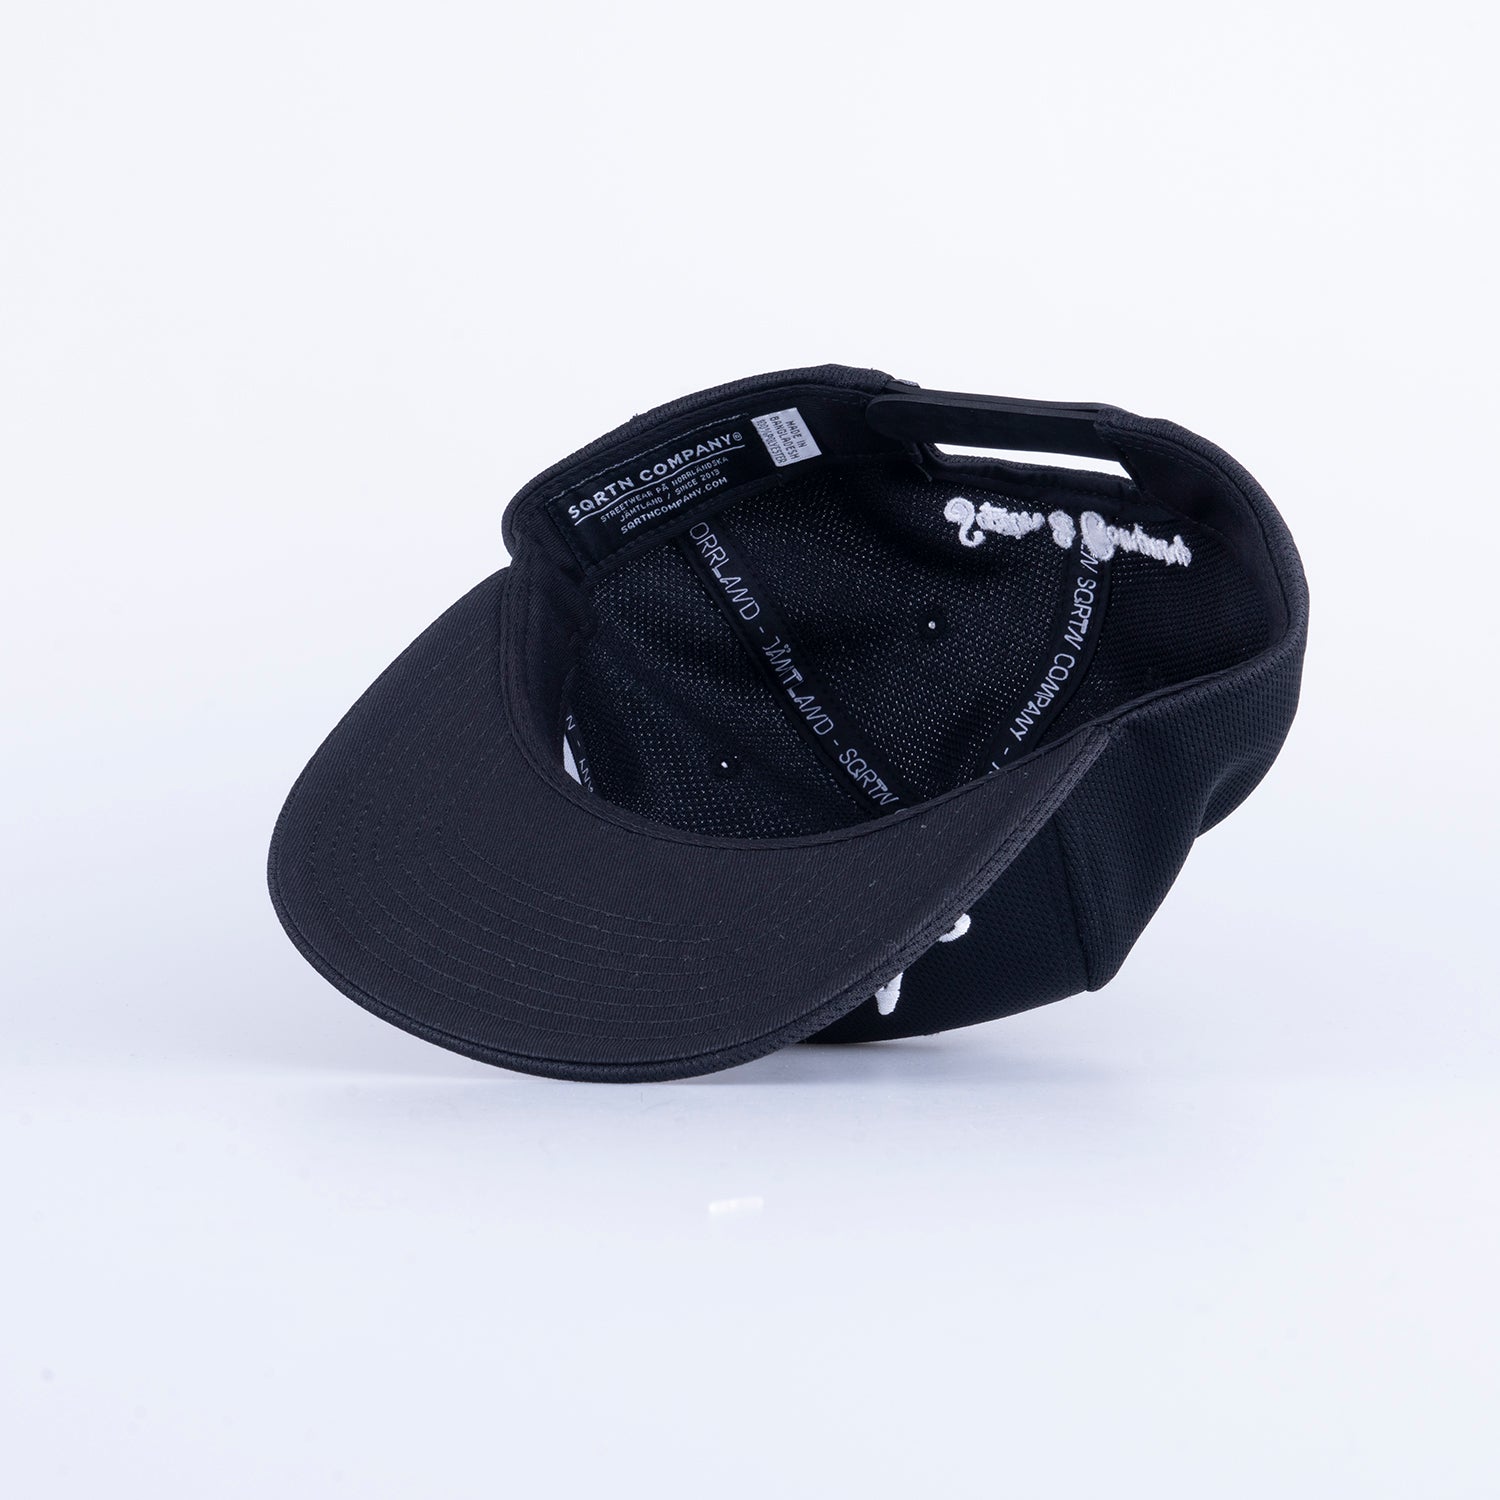 TGN SPORT CAP - BLACK